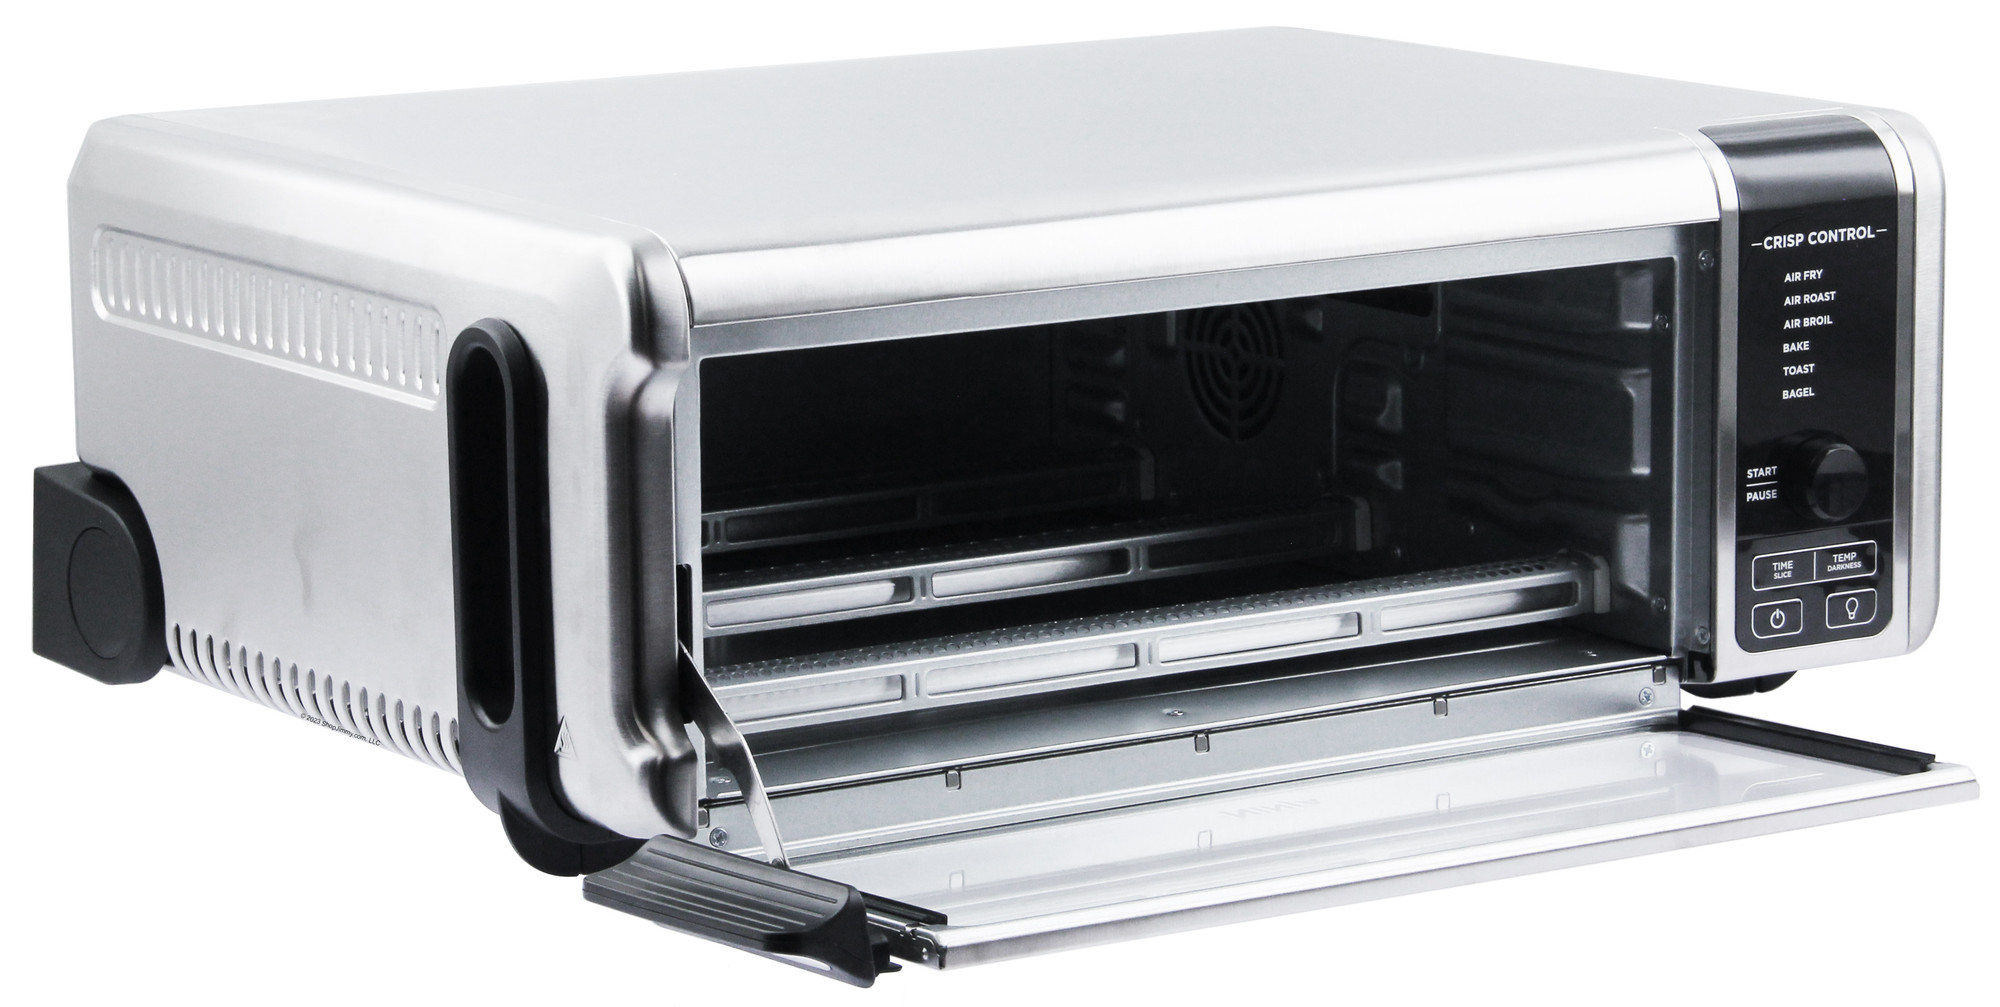 Ninja SP100 Foodi 6-in-1 Digital Air Fry Oven, Large Toaster Oven